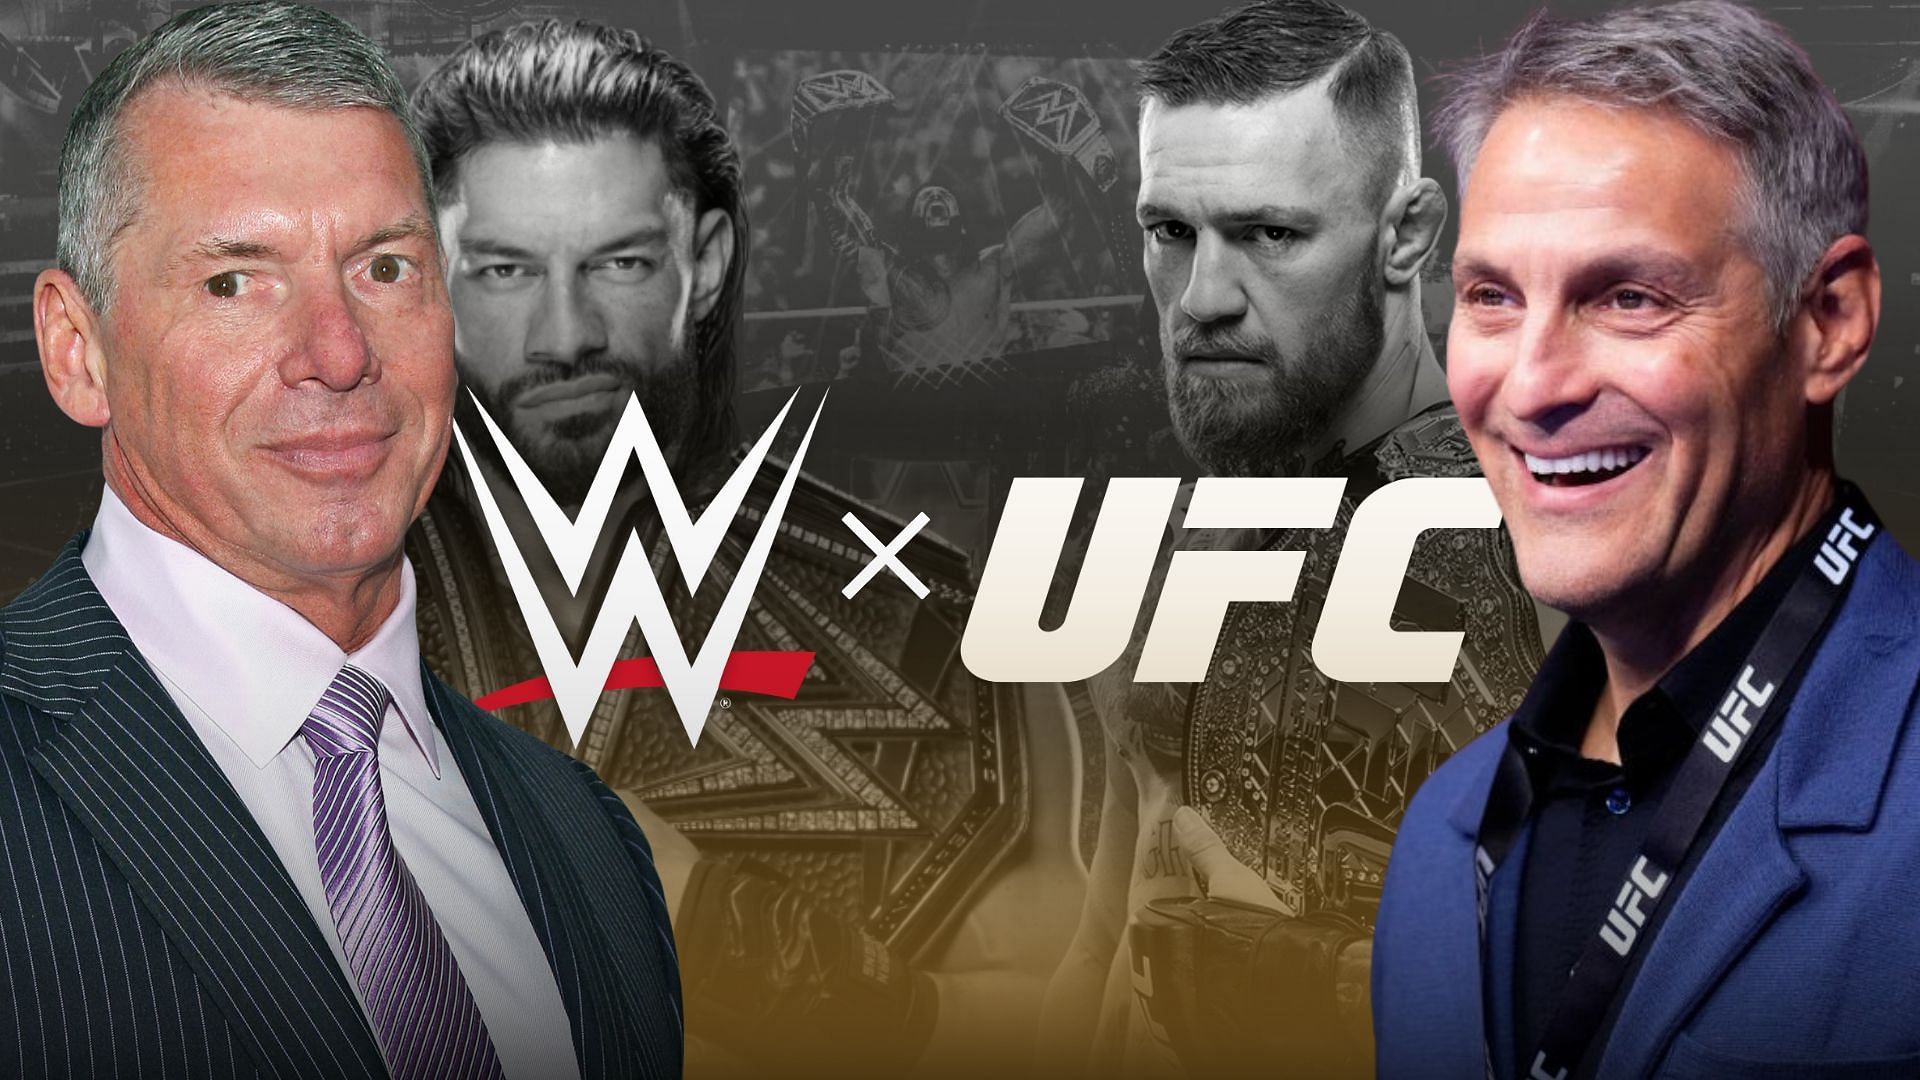 WWE merged with UFC into a single entity